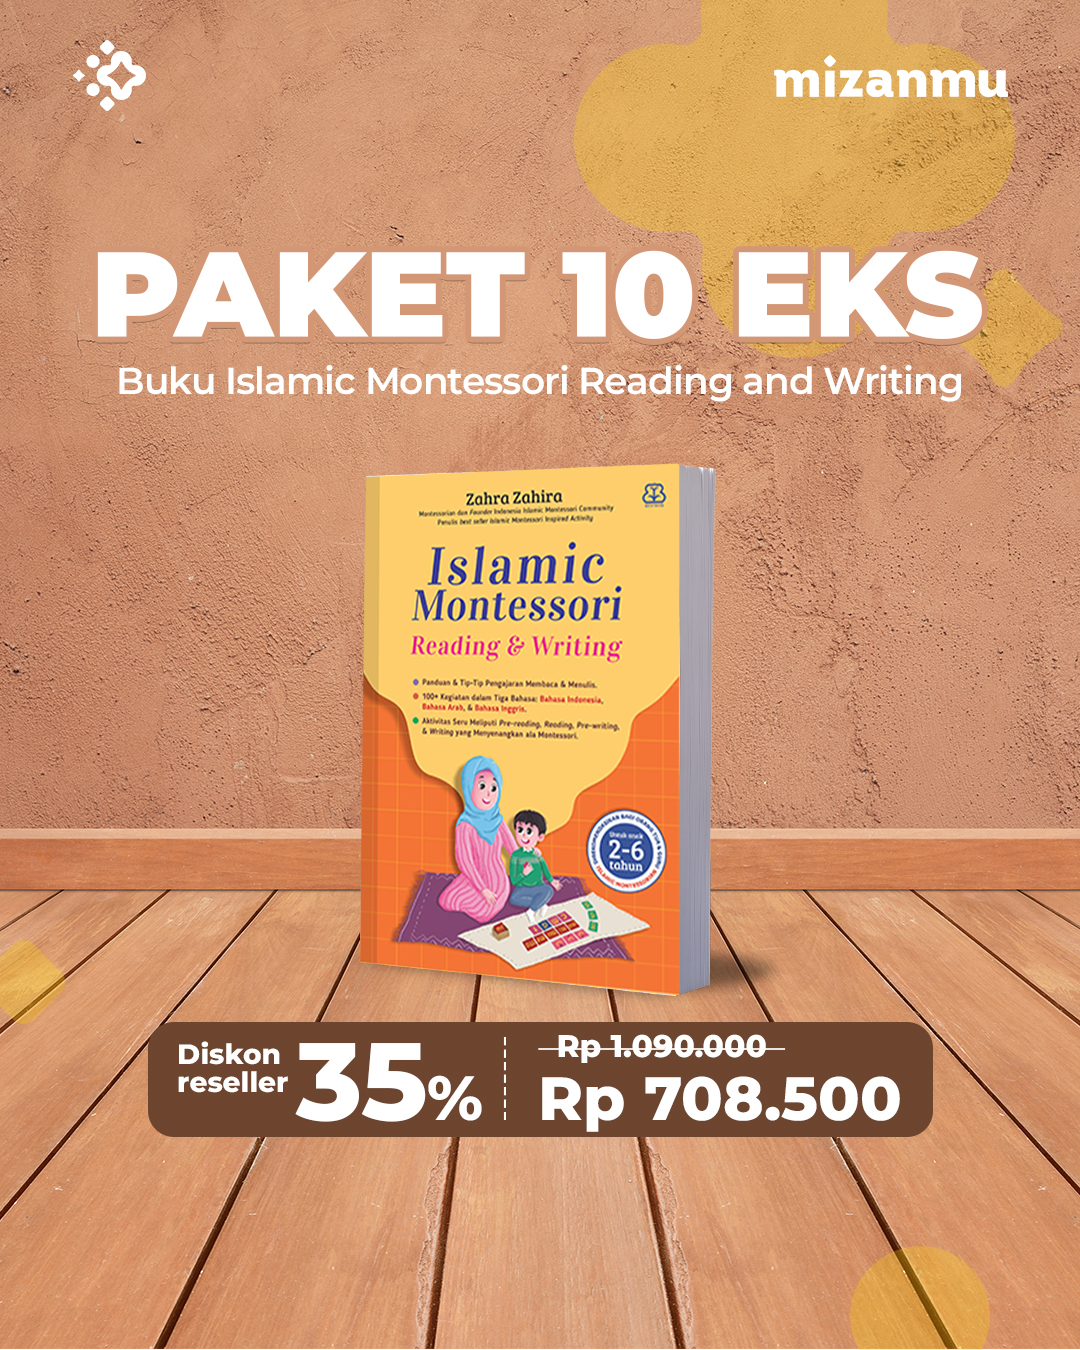 PAKET 1 10 EKS - SO ISLAMIC MONTESSORI READING & WRITING BONUS WEBINAR DAN VOUCHER